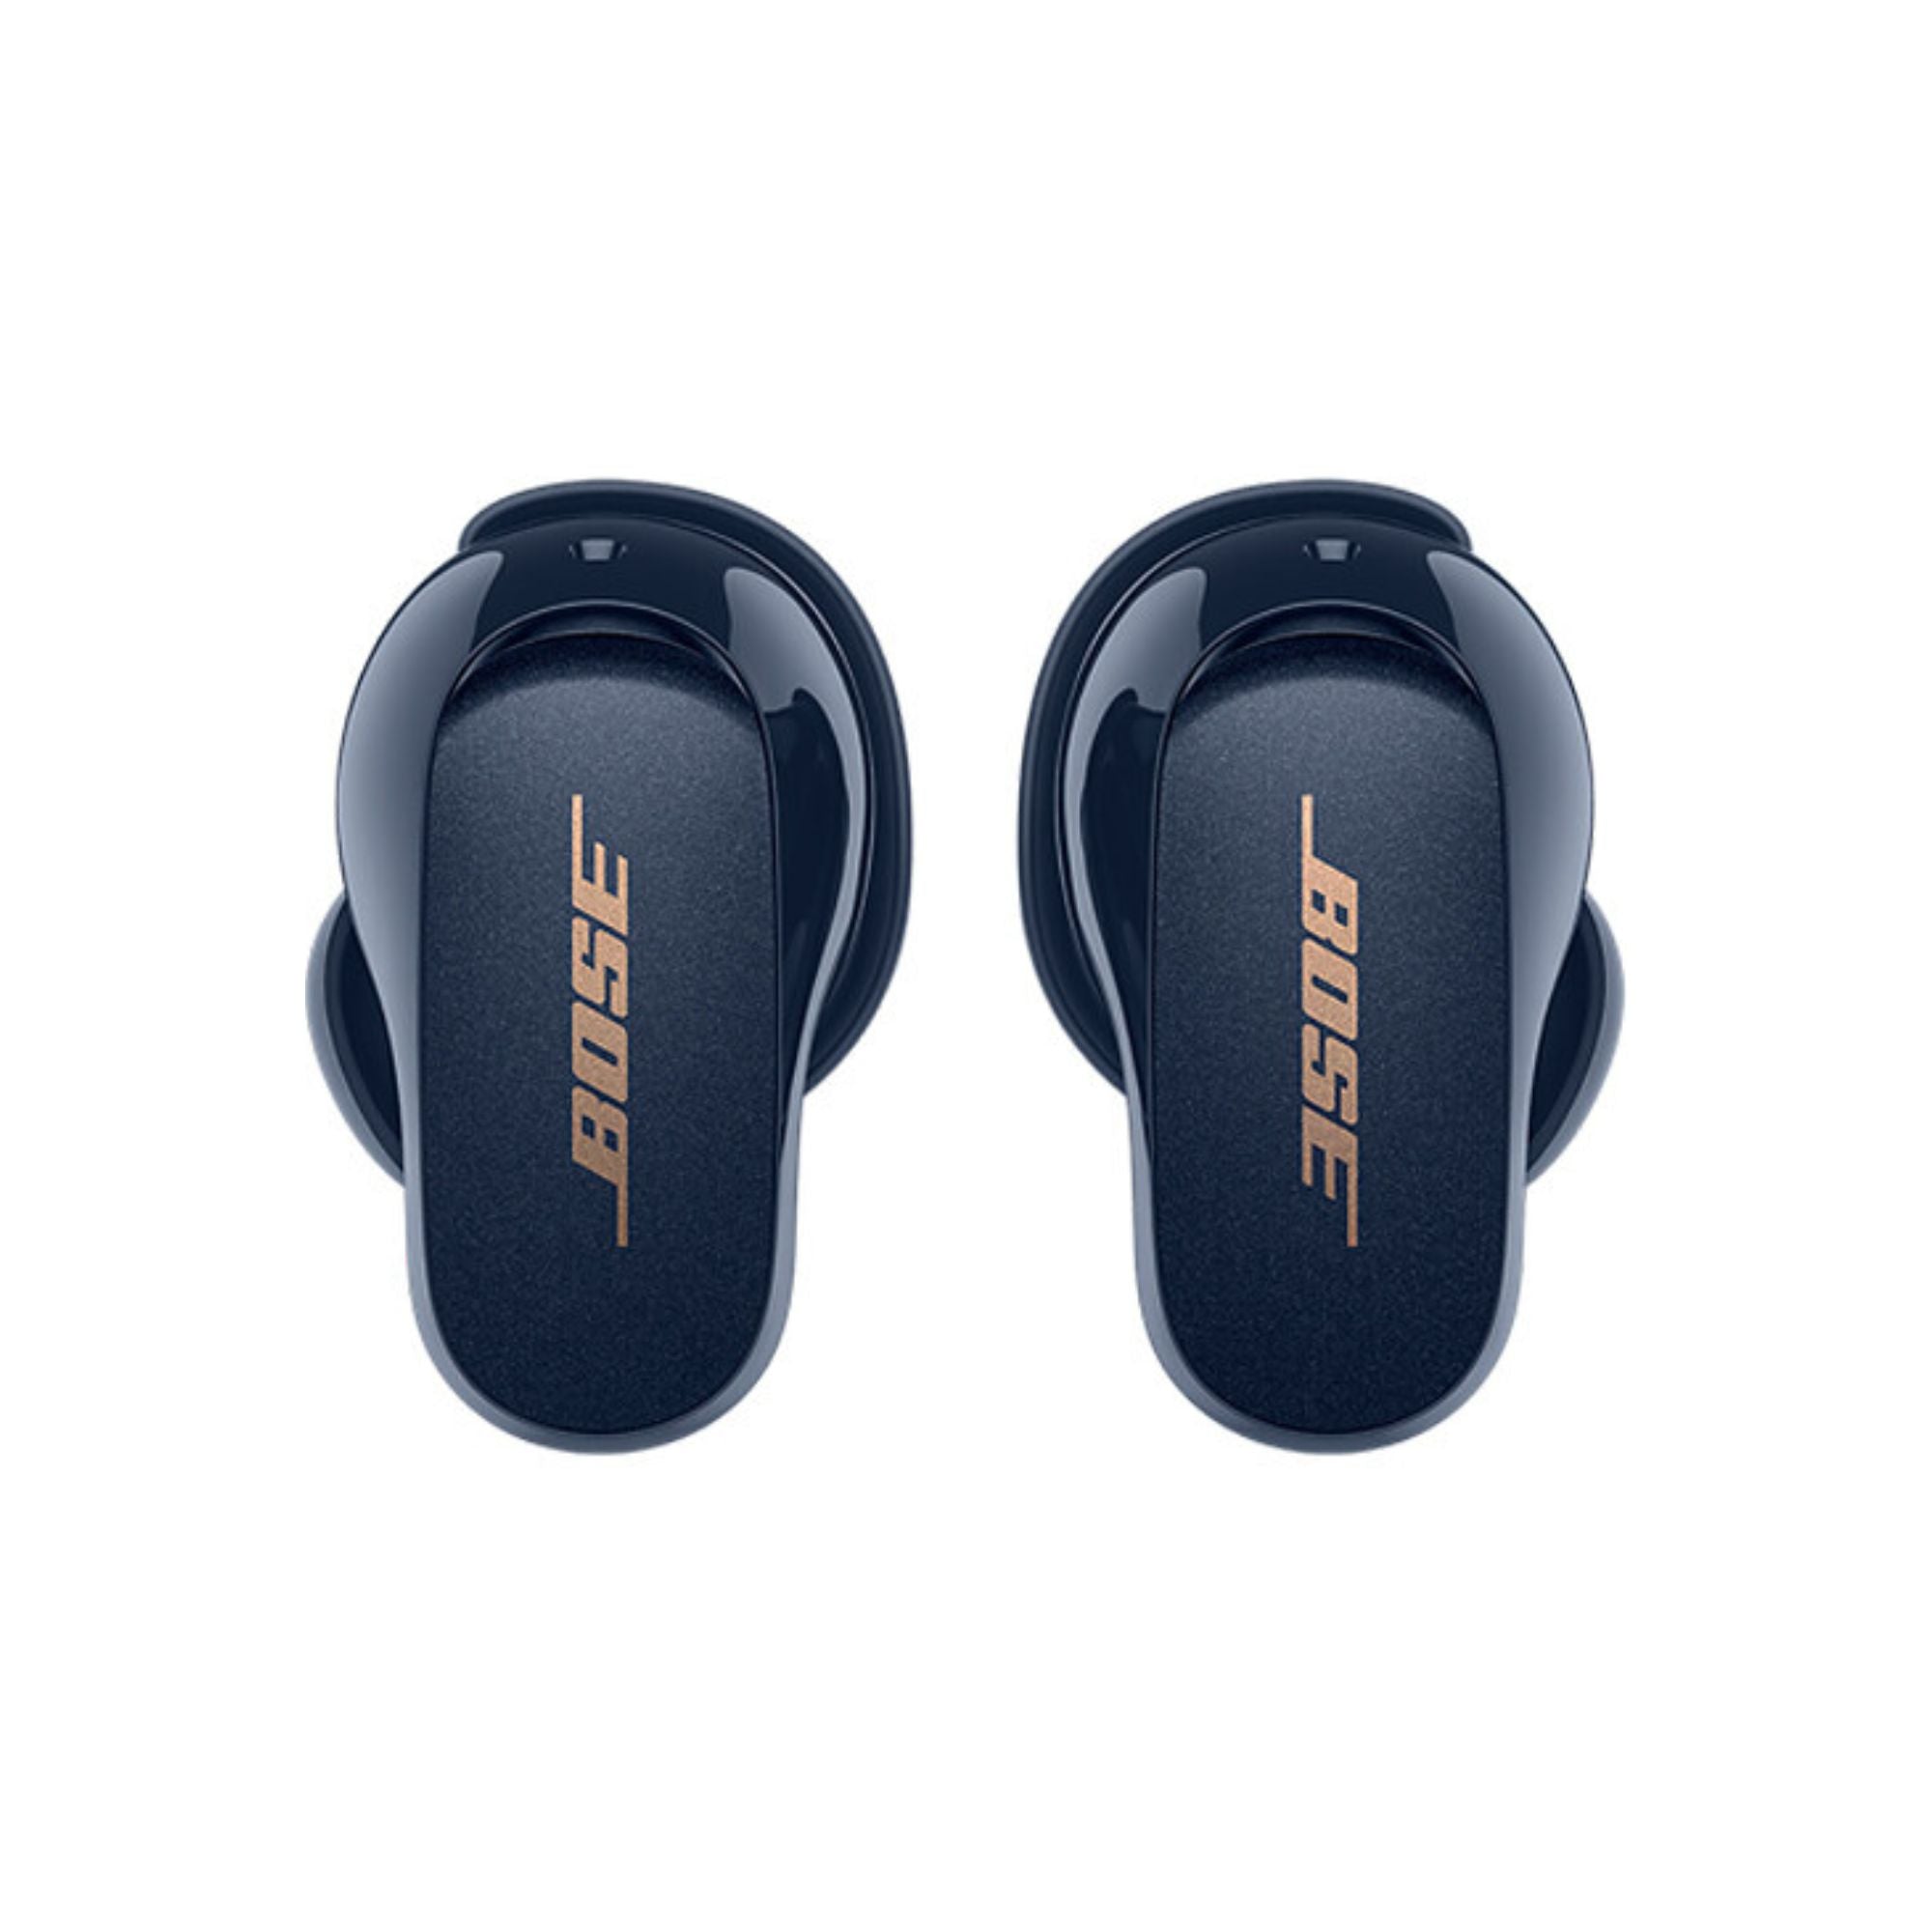 Bose QuietComfort Earbuds II Noise-Canceling True Wireless In-Ear Headphones